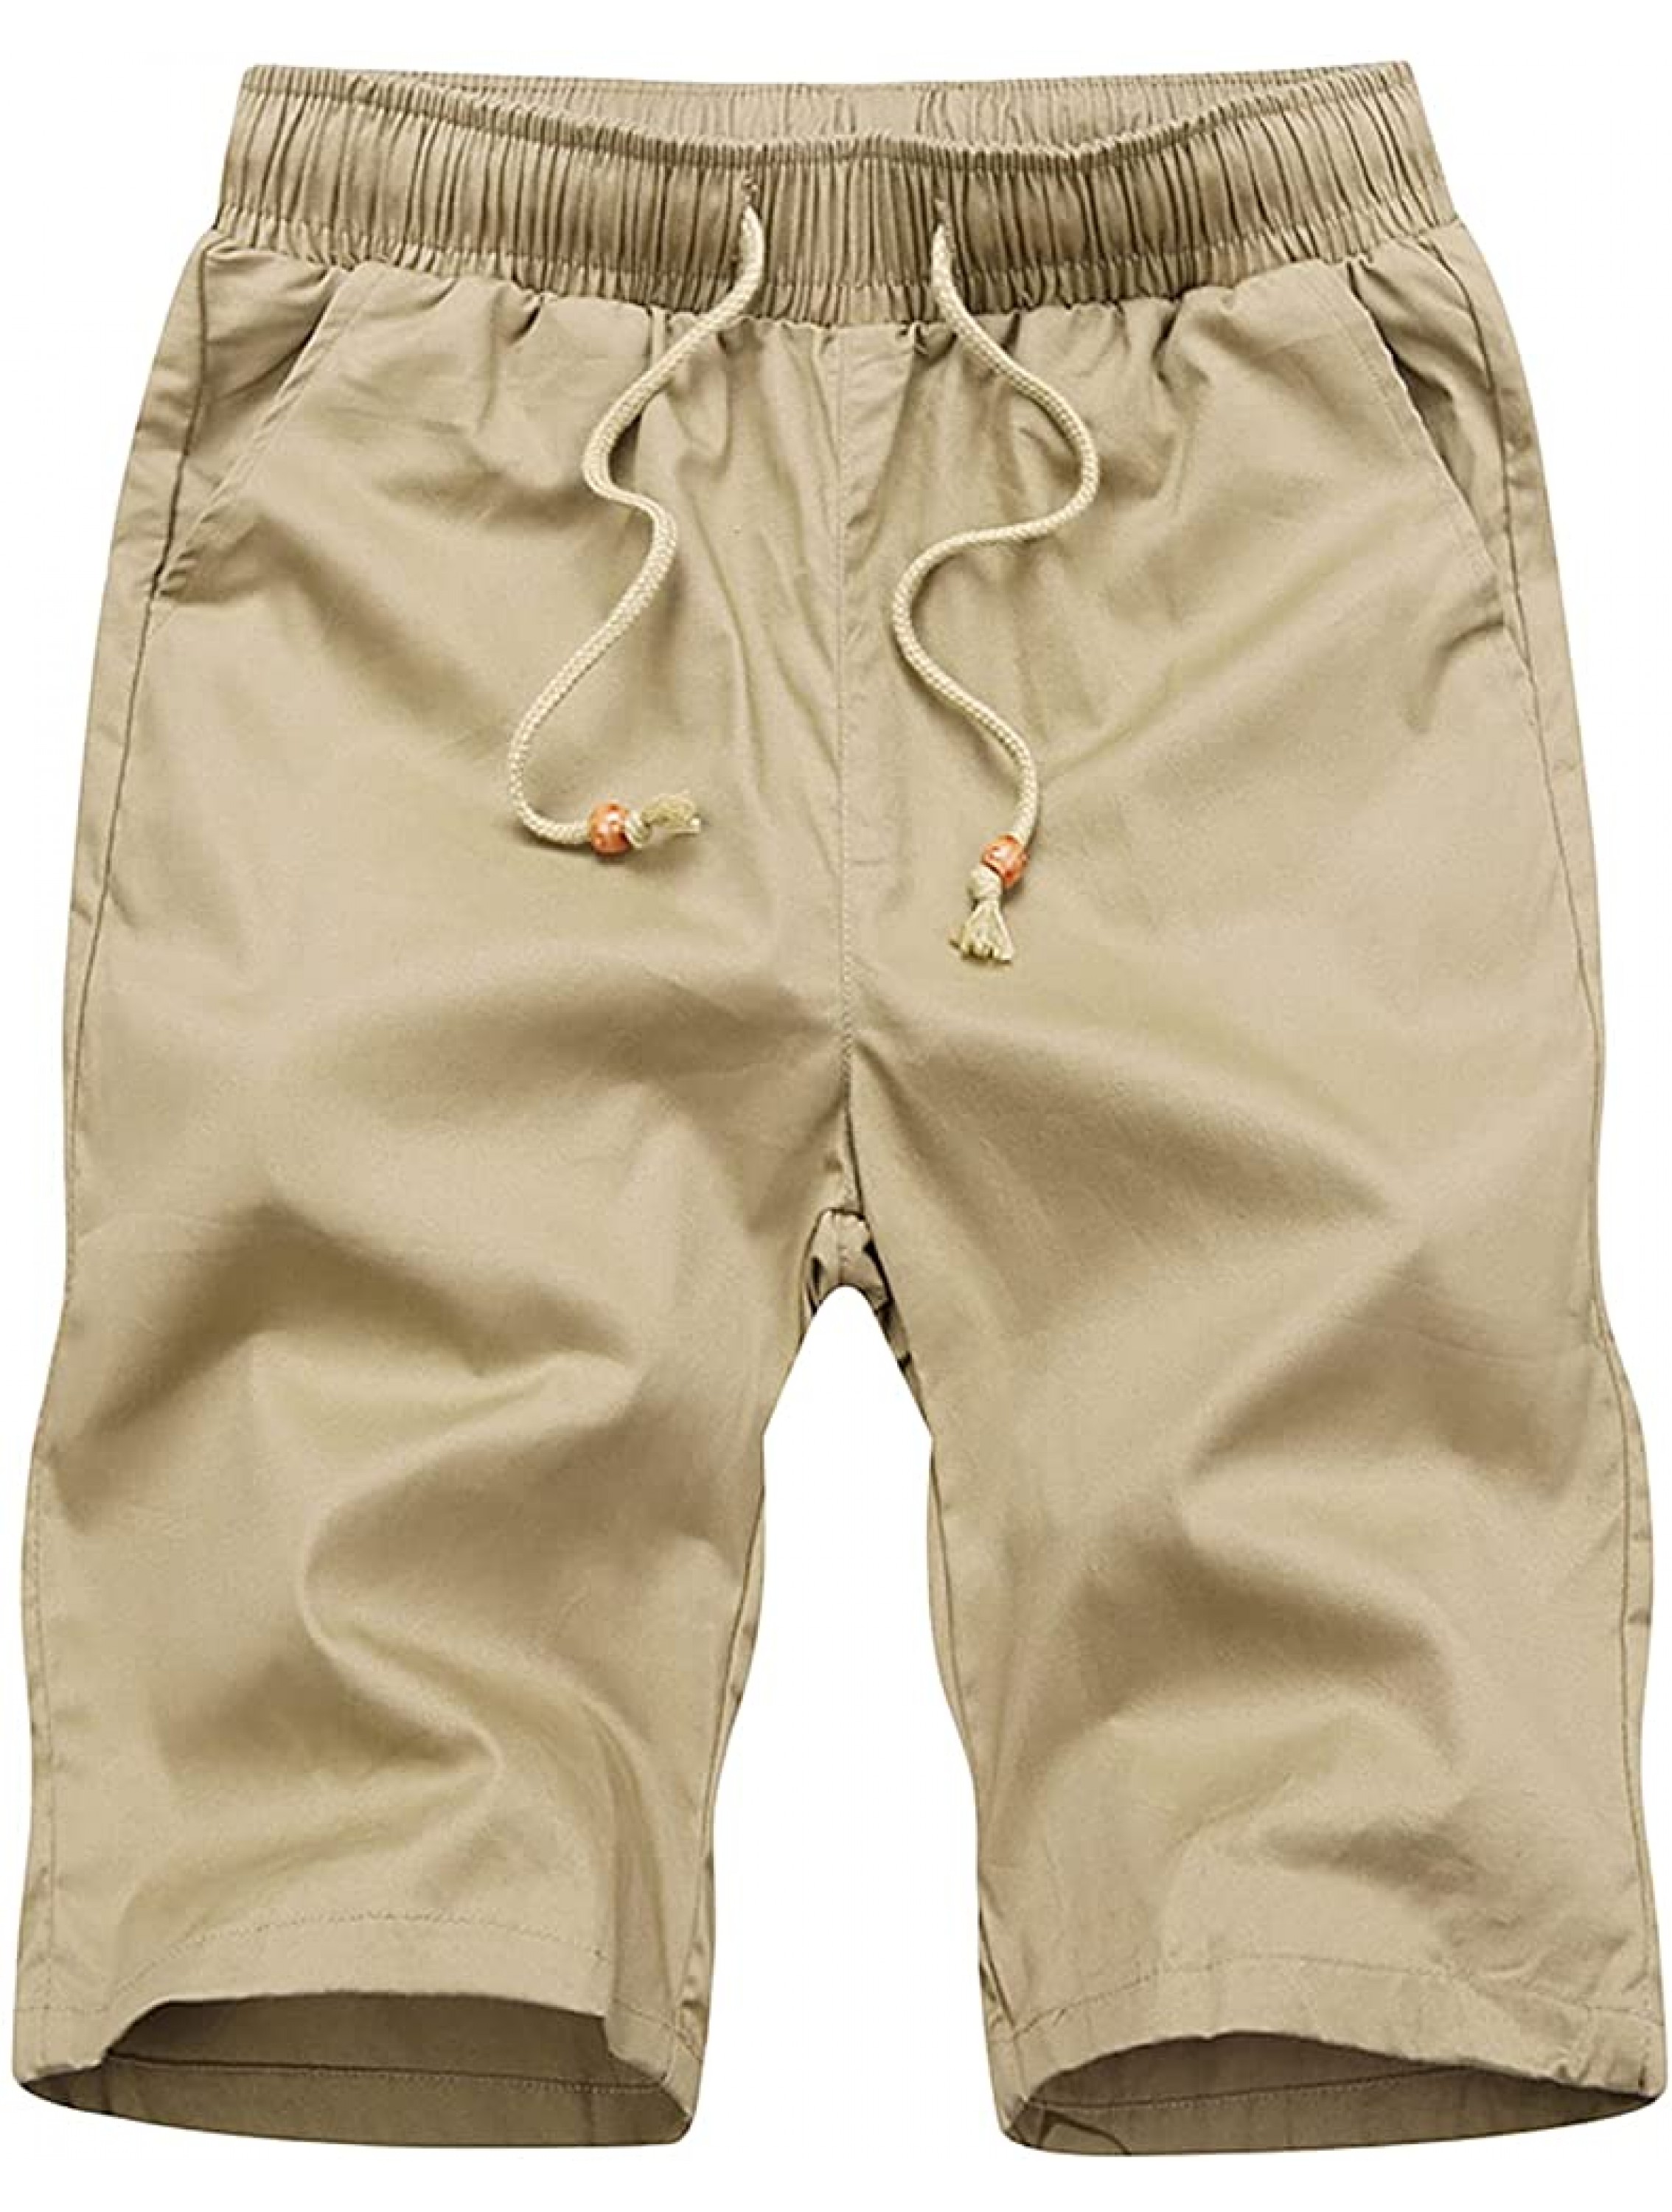 Men's Elastic Waist Casual Shorts Drawstring Summer Beach Shorts With Pockets Outdoor Classic Slim Fit Short Pants Khaki,Large - BBM1RUBBG